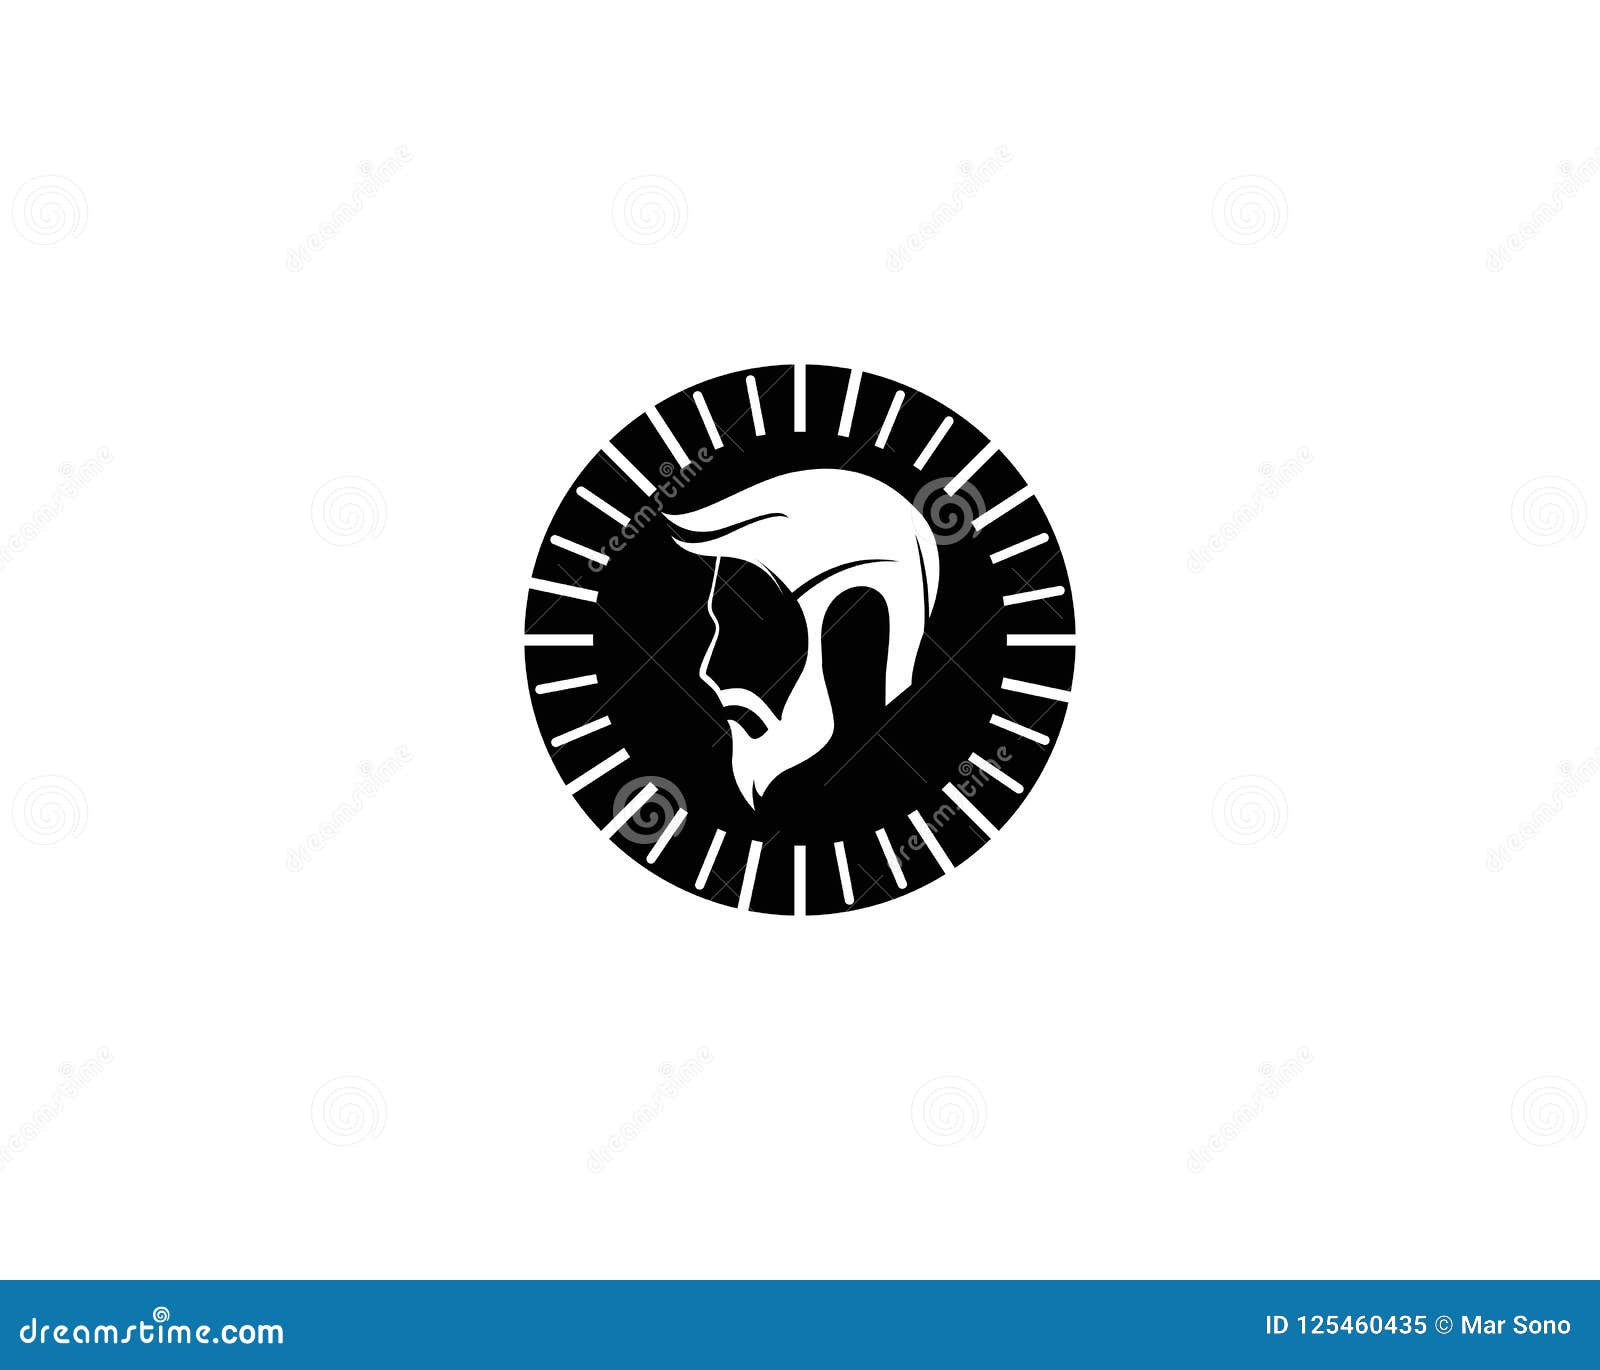 Barber shop logo vector stock vector. Illustration of label - 125460435